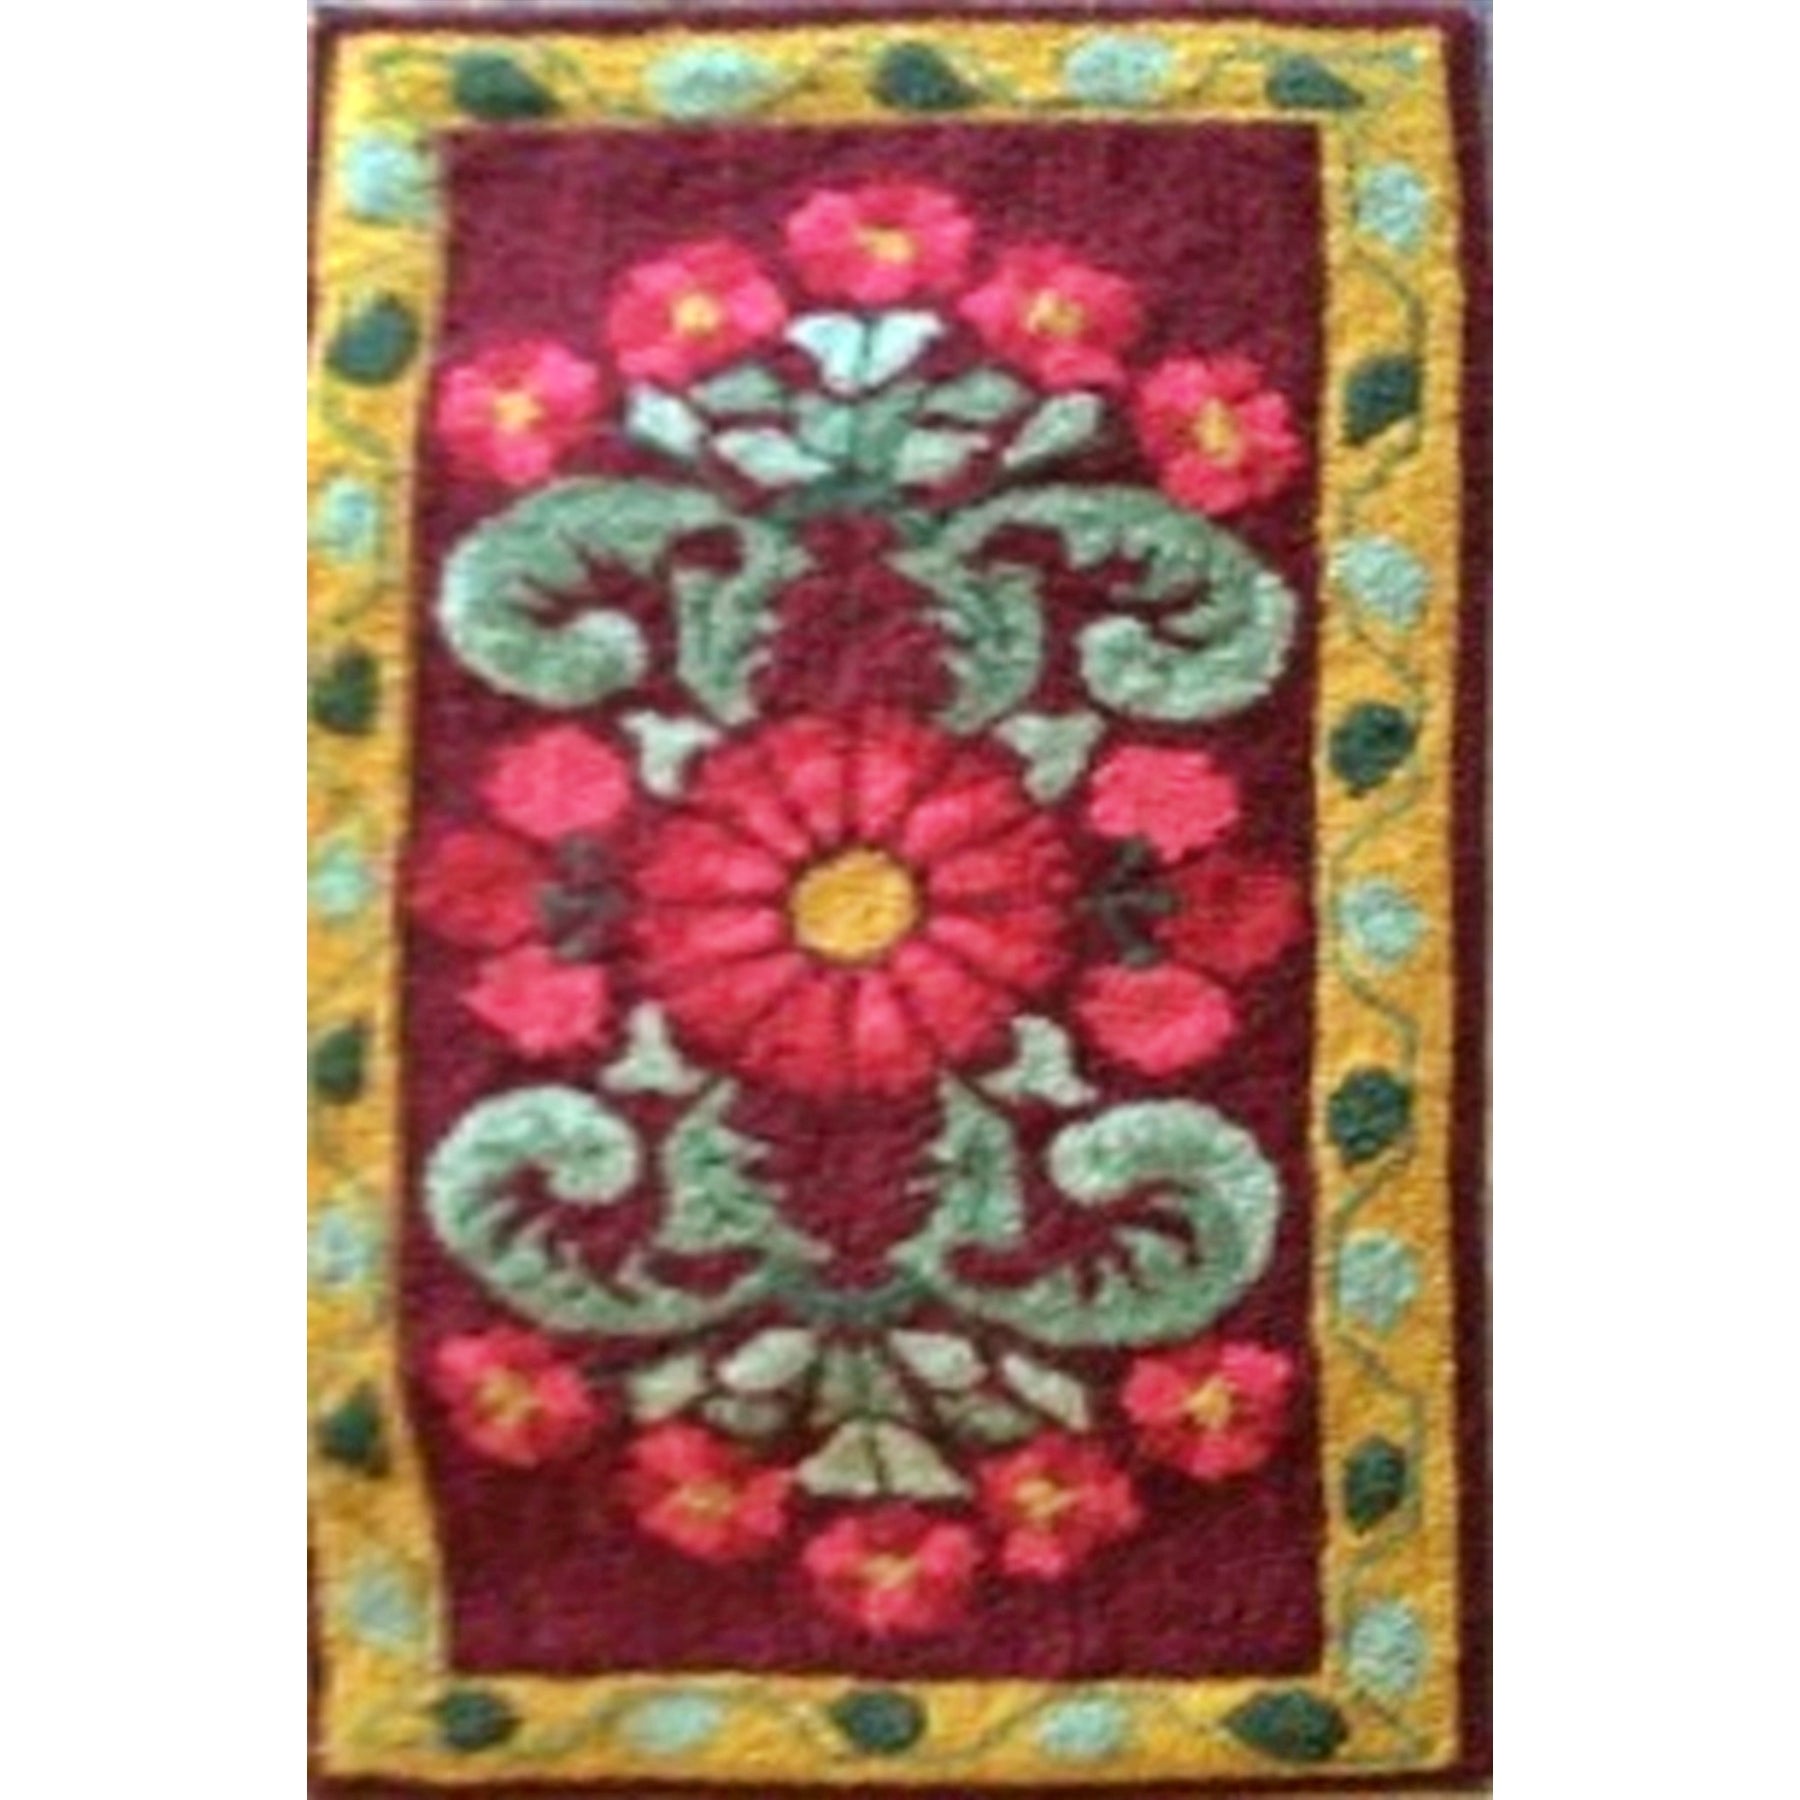 Desert Rose, rug hooked by Andrea Pyman